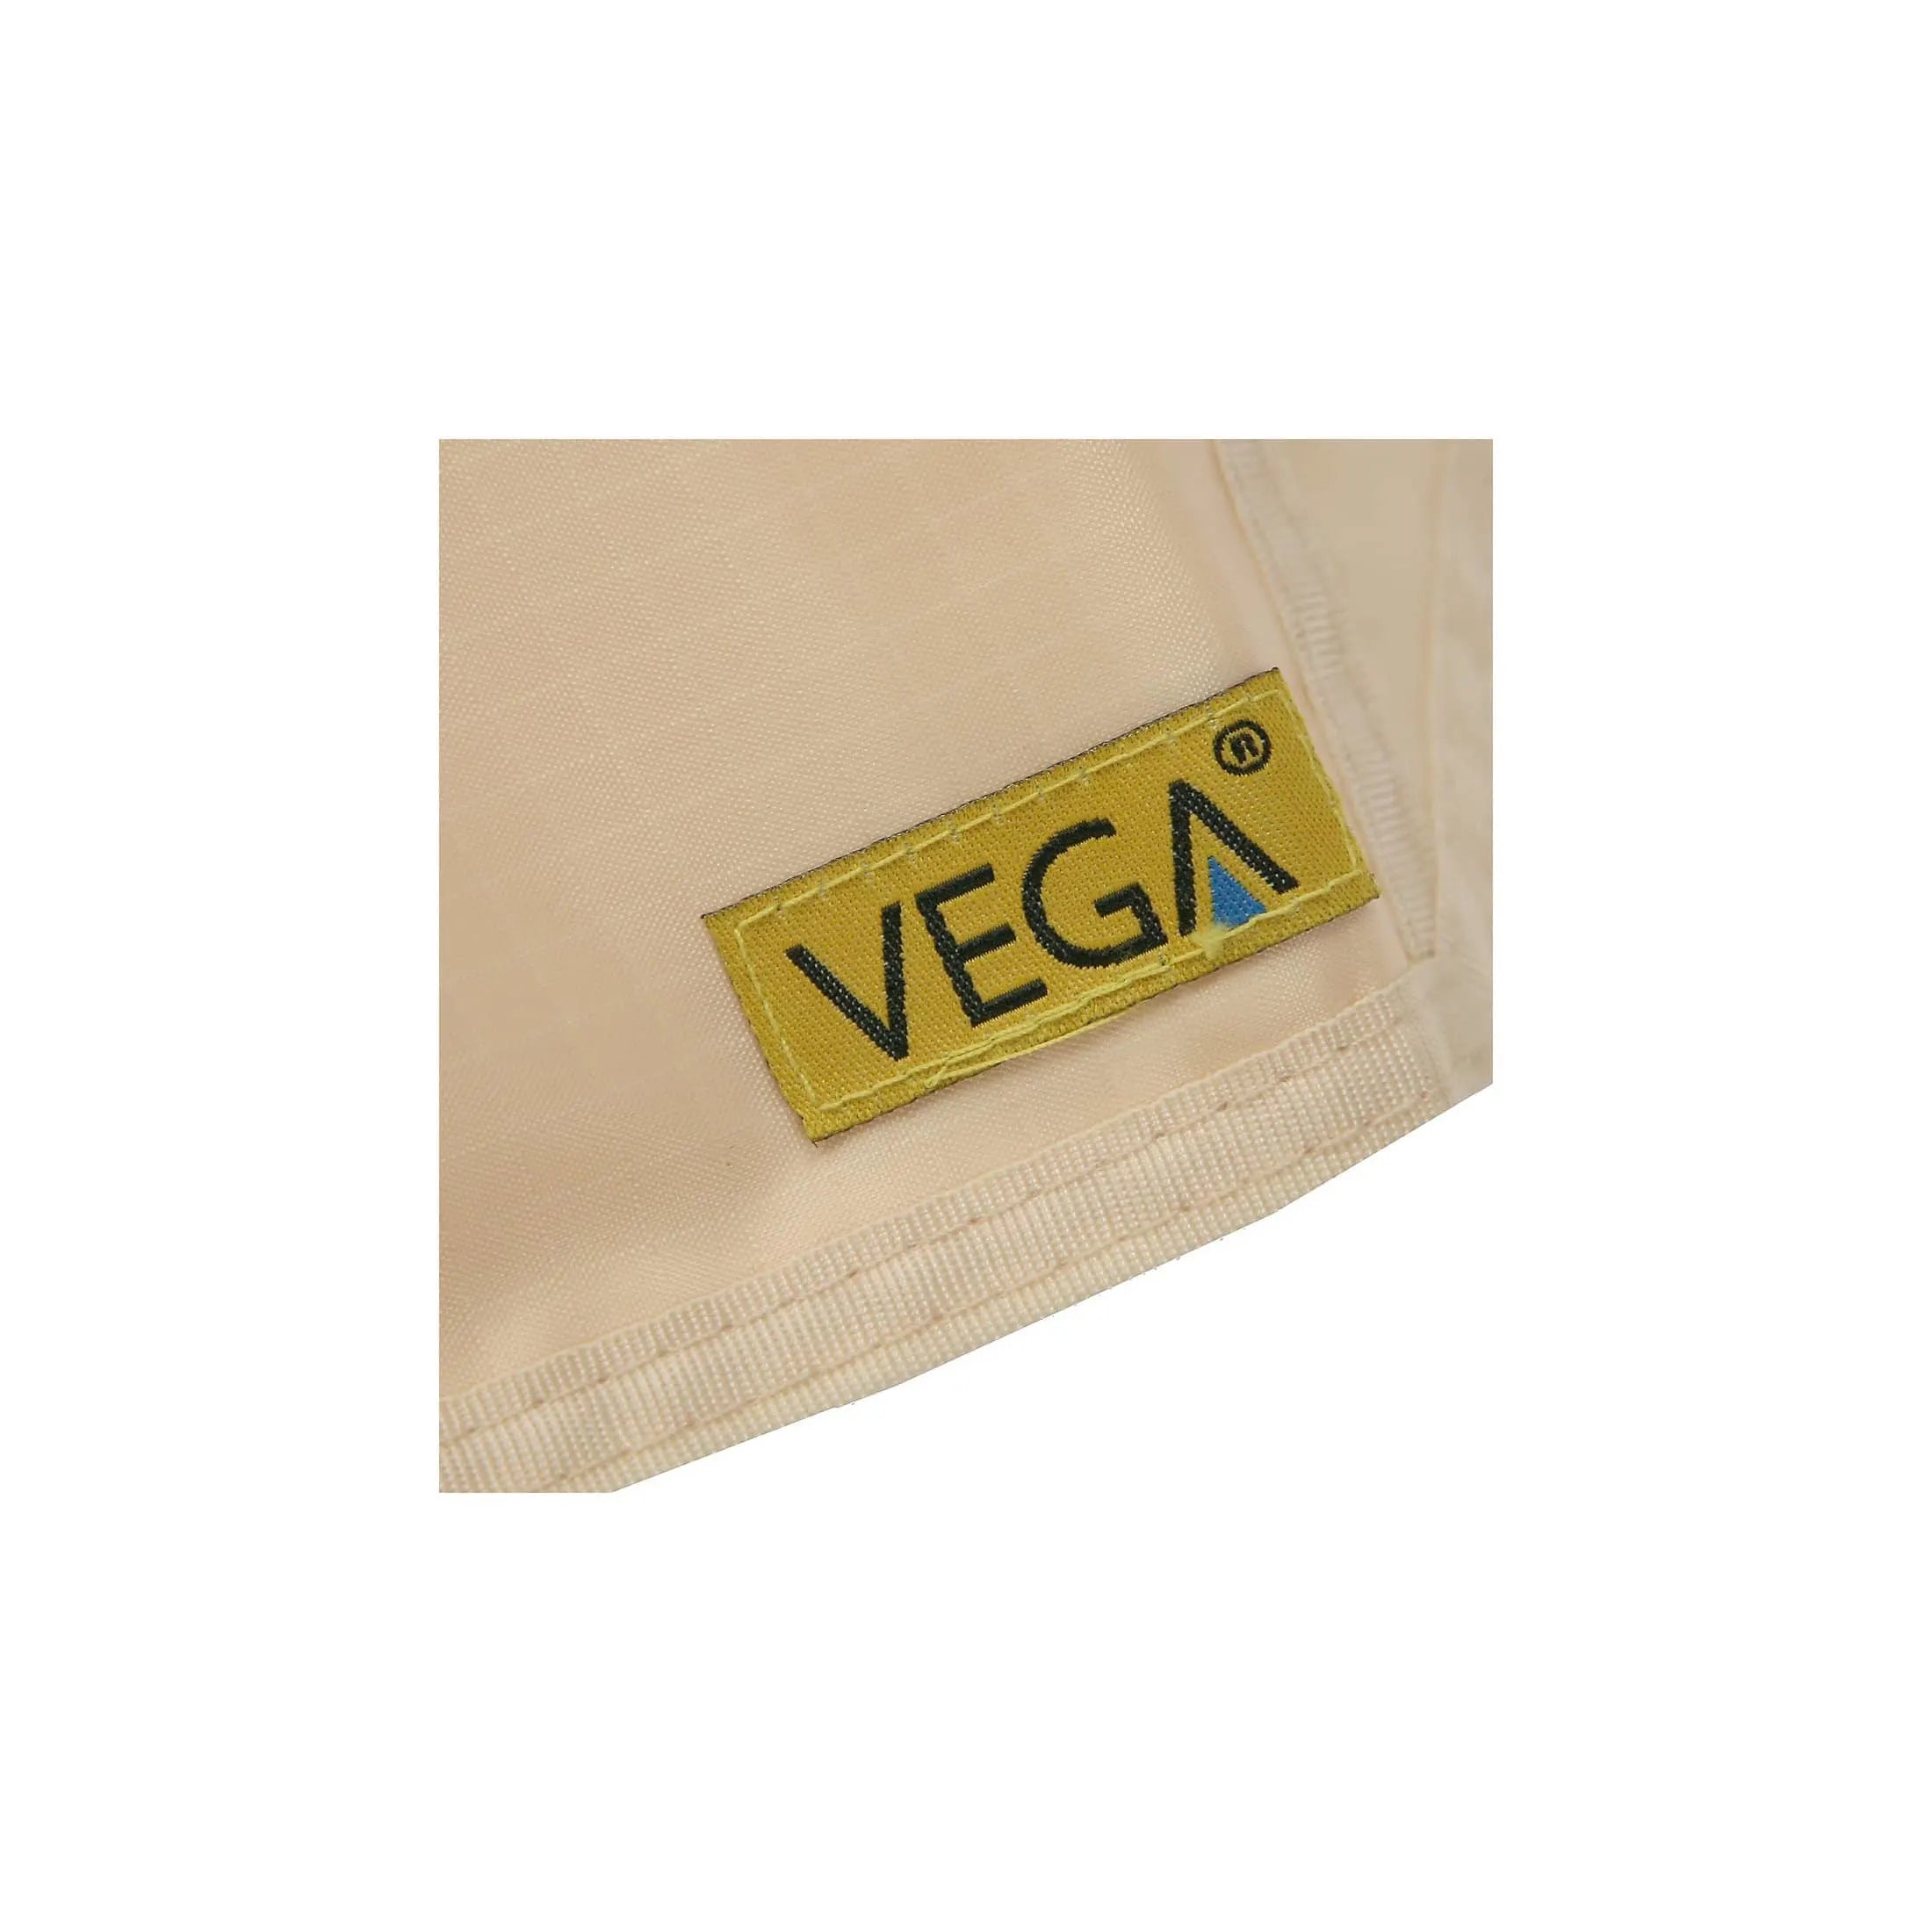 Titan Vega Basic Reise Hüfttasche 38 cm - beige